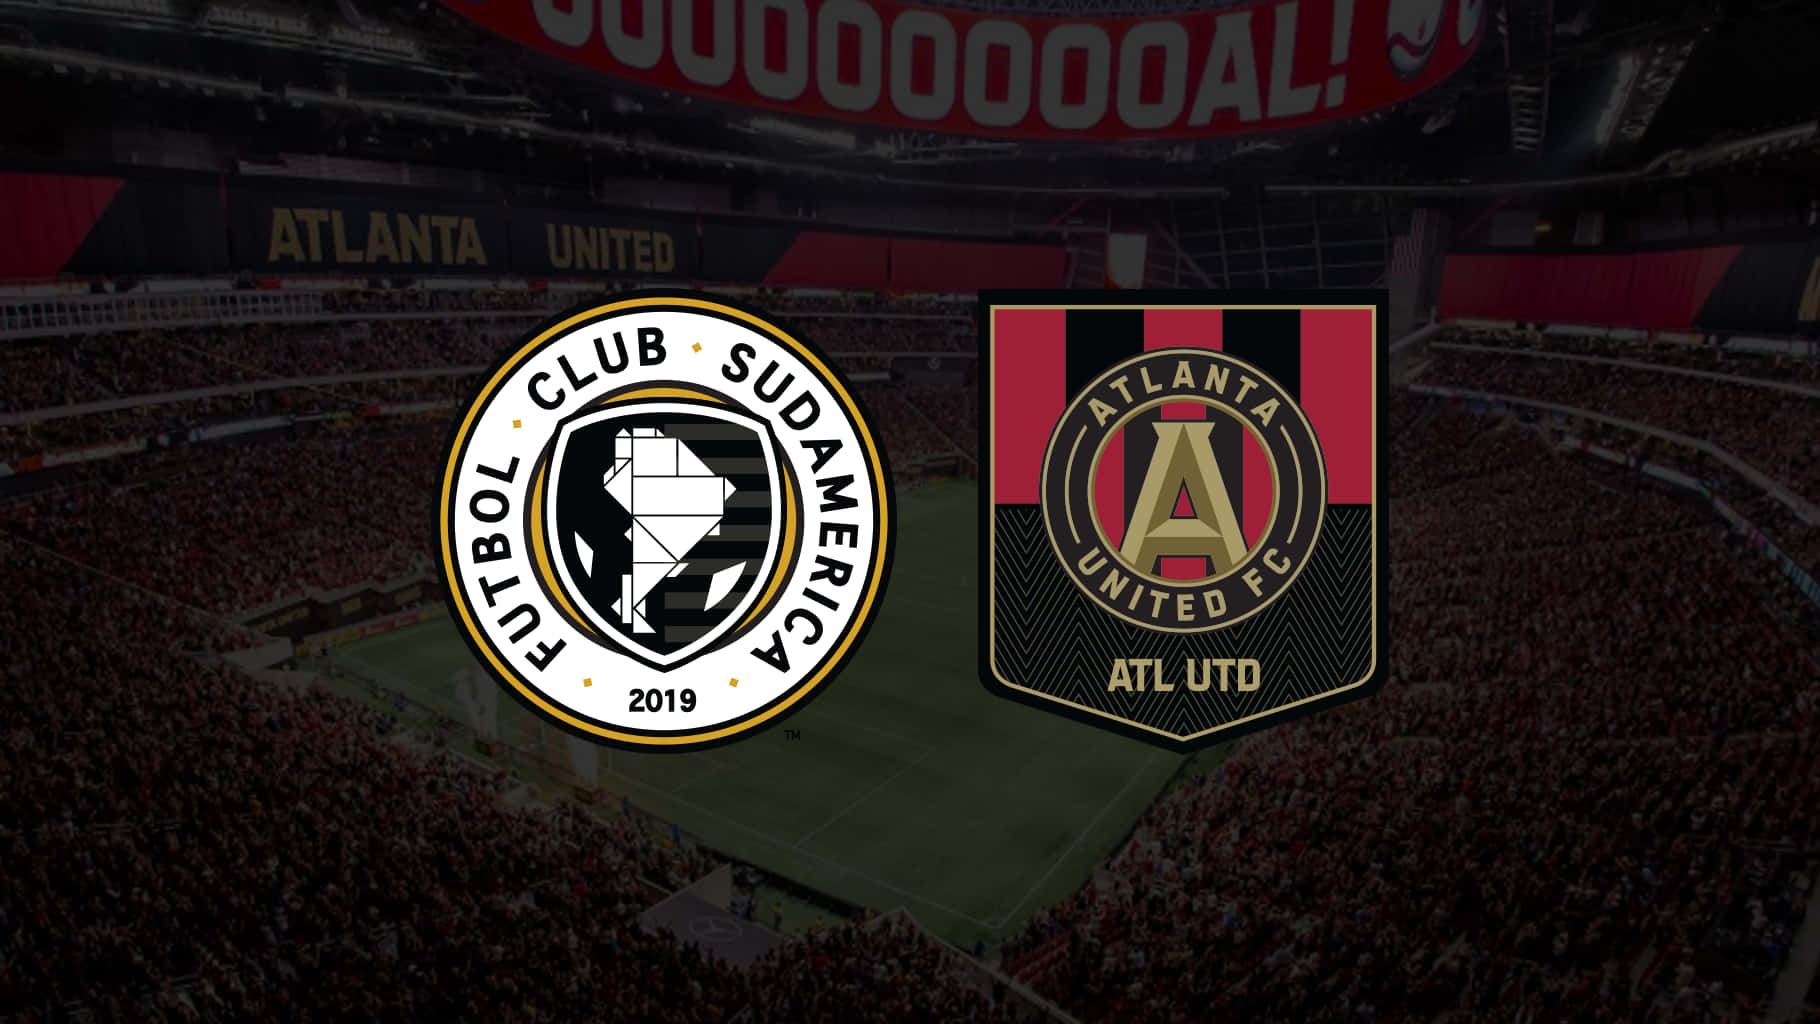 Futbol Club Sudamerica Partnership With Atlanta United Fc Poster Picture